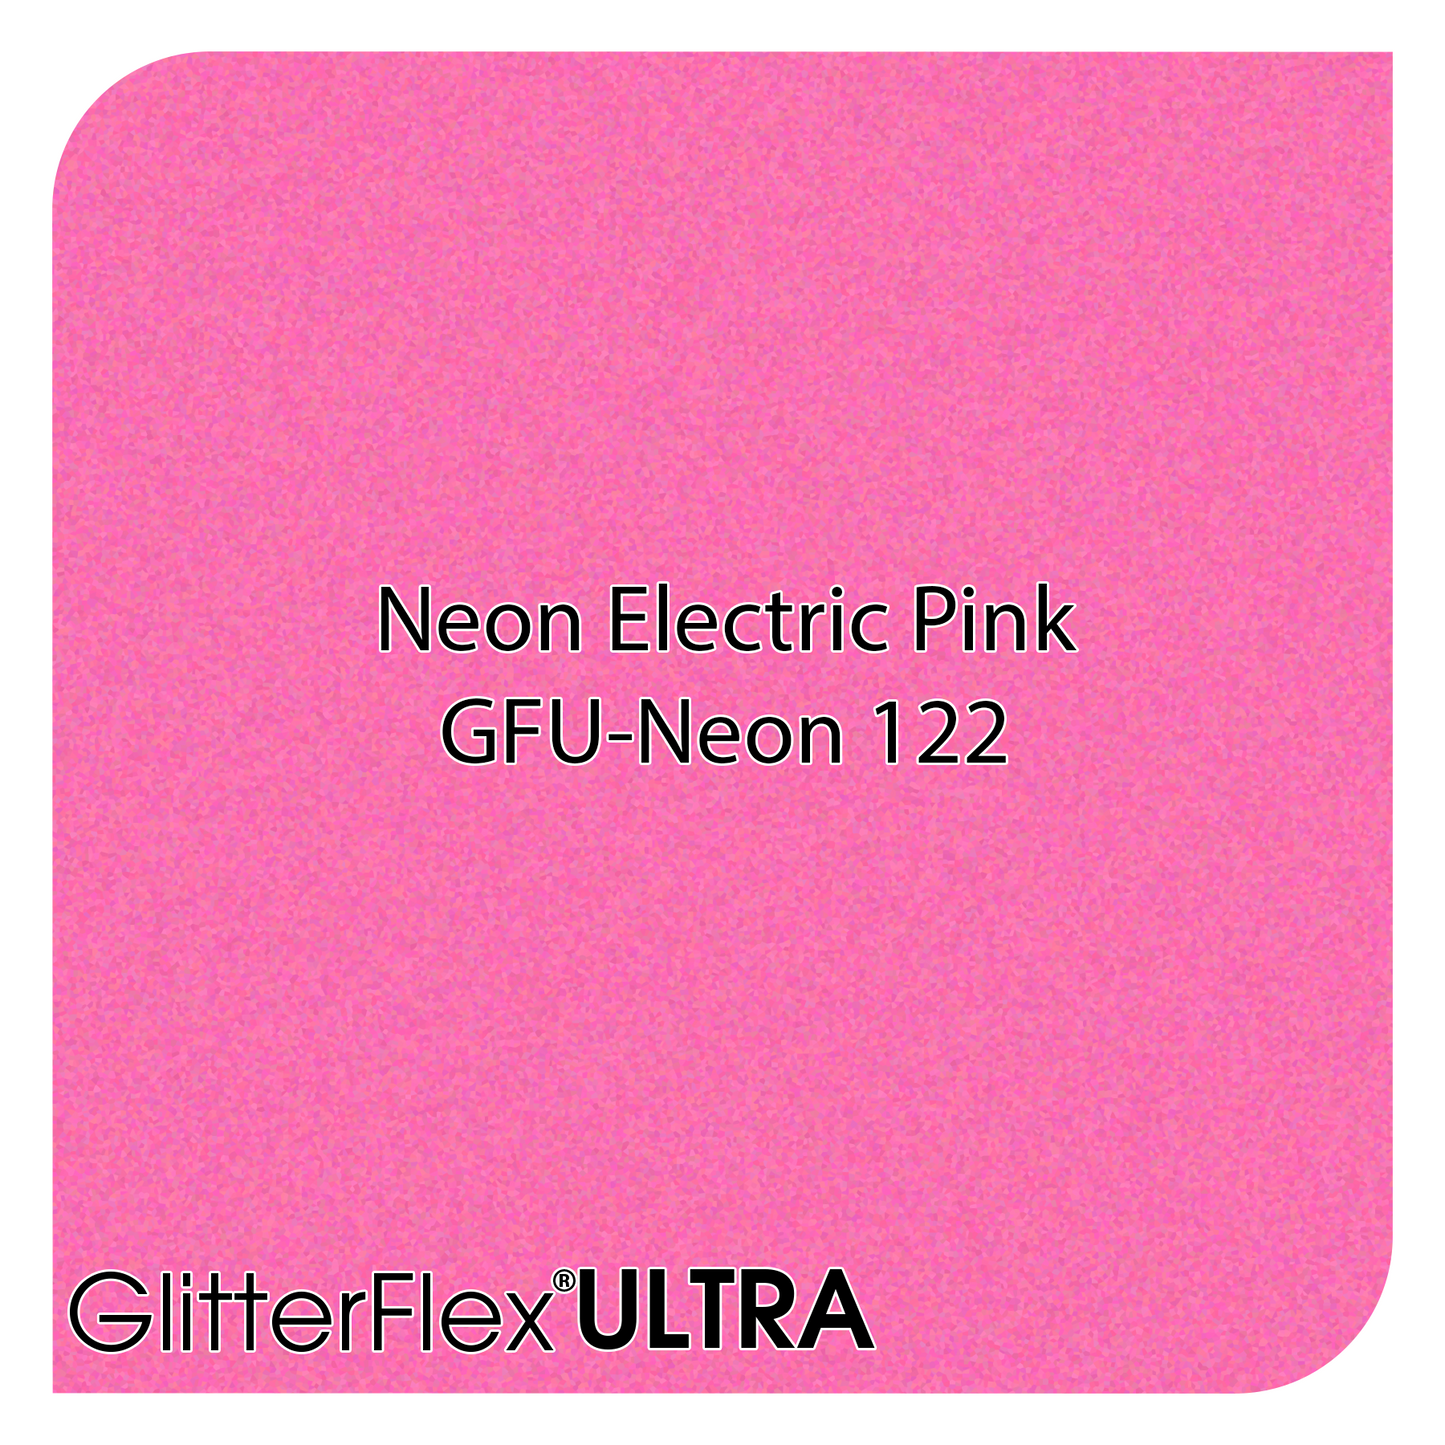 GLITTERFLEX® ULTRA NEONS - 12" x 20" Sheet